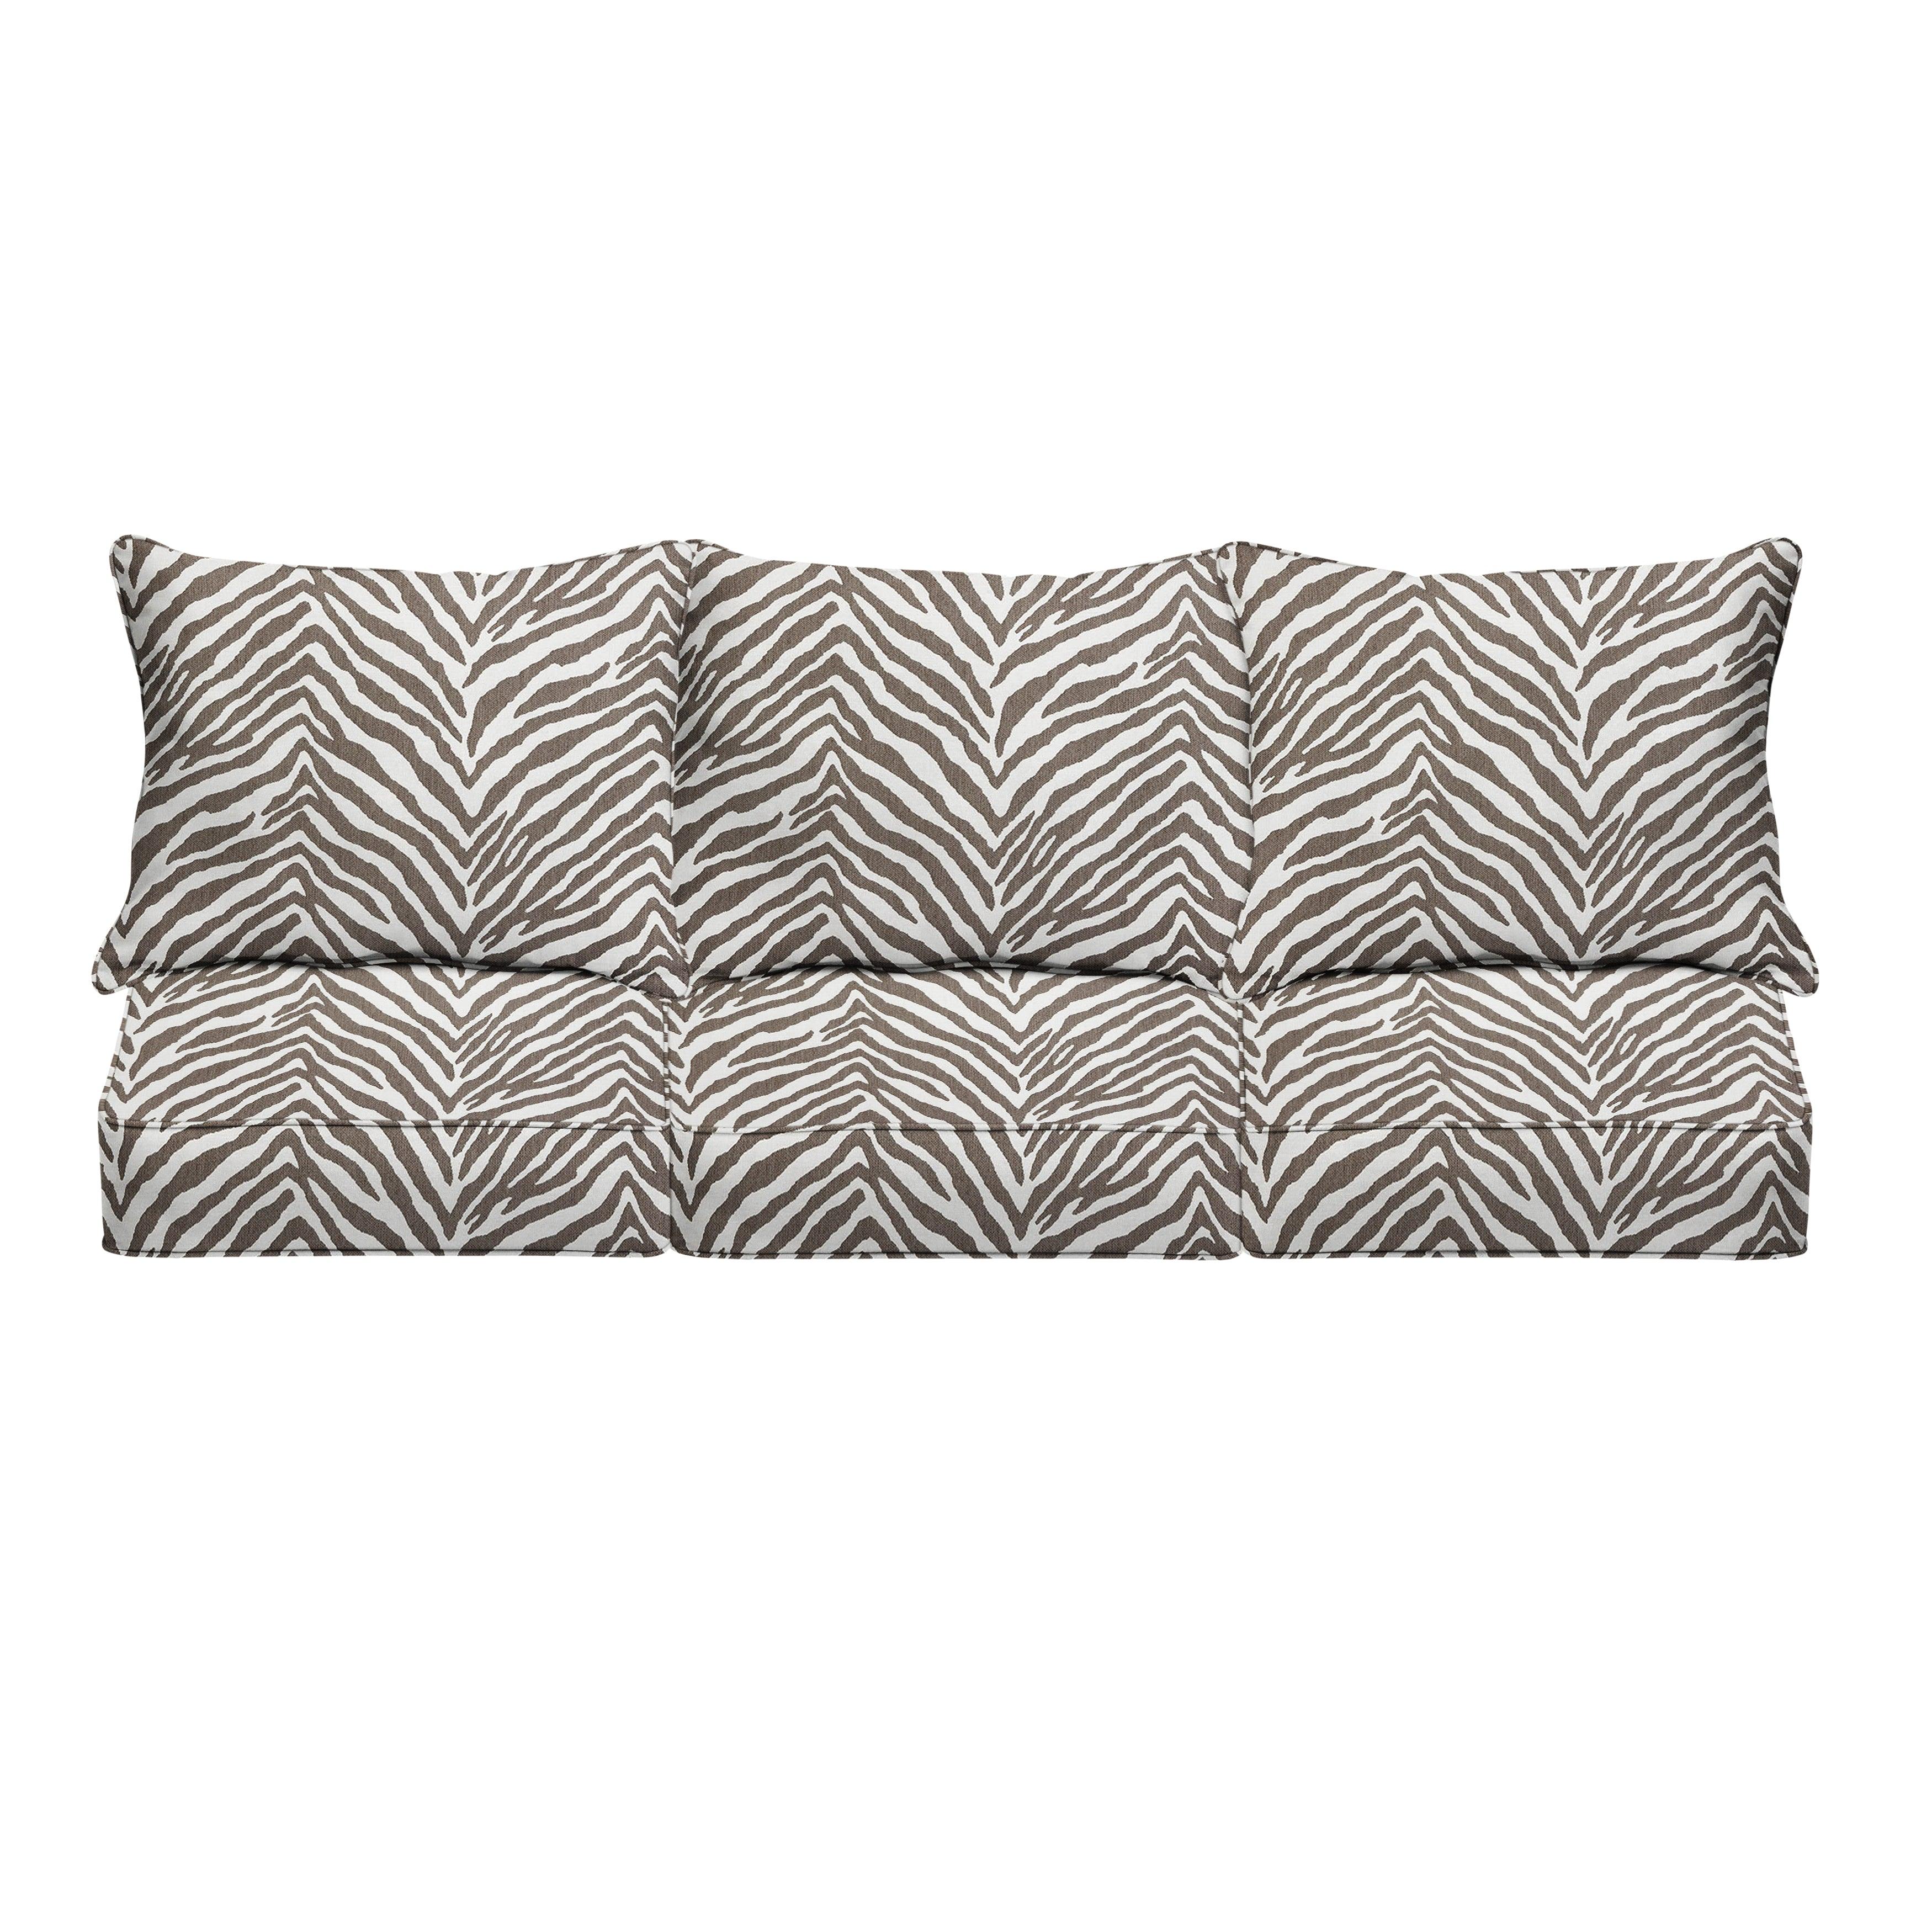 Sunbrella Deep Seating Sofa Pillow & Cushion Set - Sorra Home